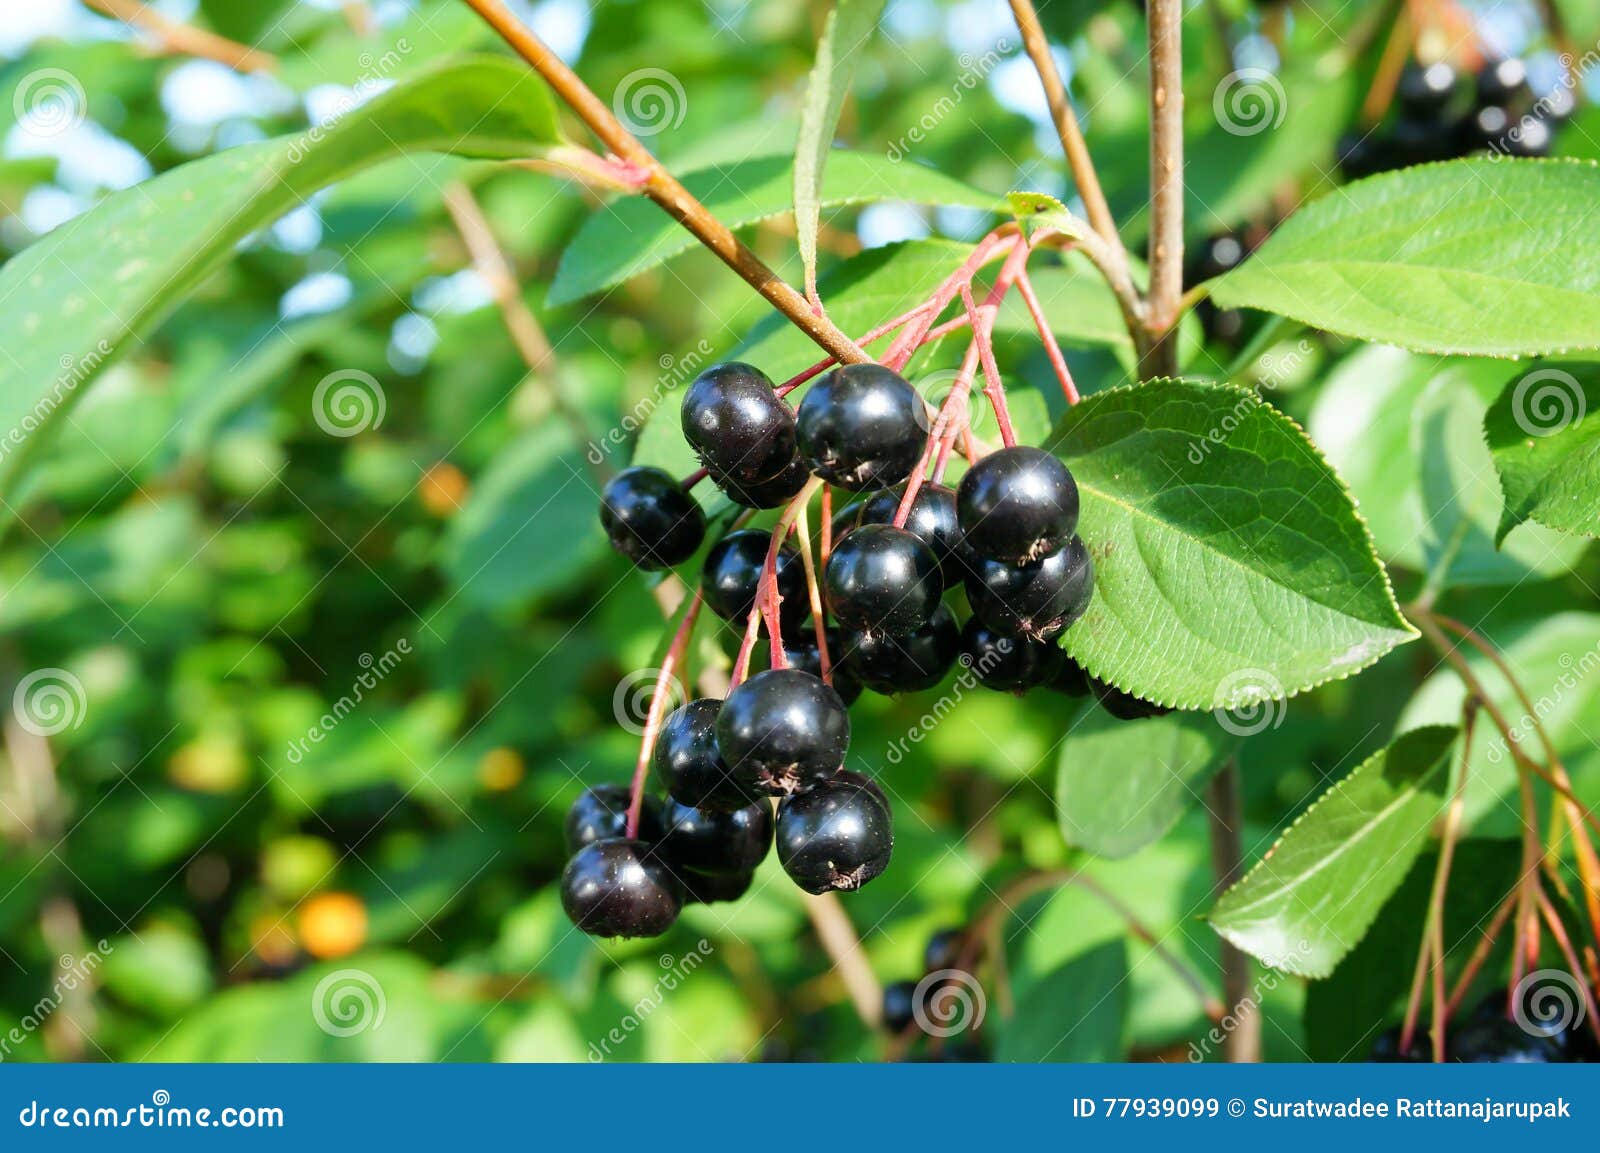 black chokeberry(aronia melanocarpa) bush with ripe berries